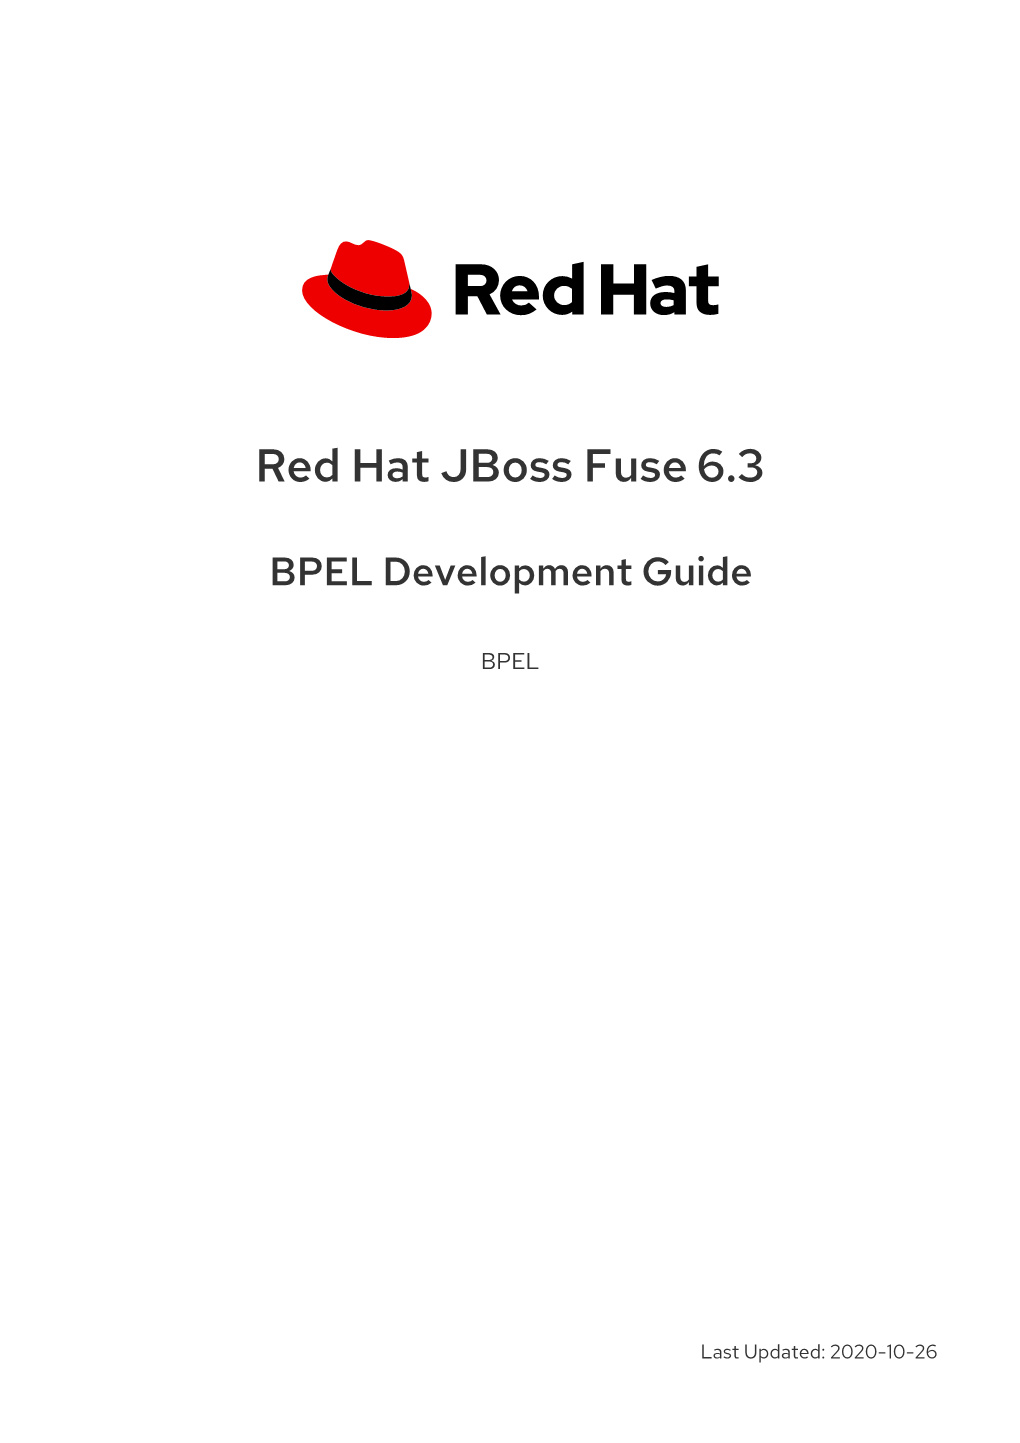 Red Hat Jboss Fuse 6.3 BPEL Development Guide